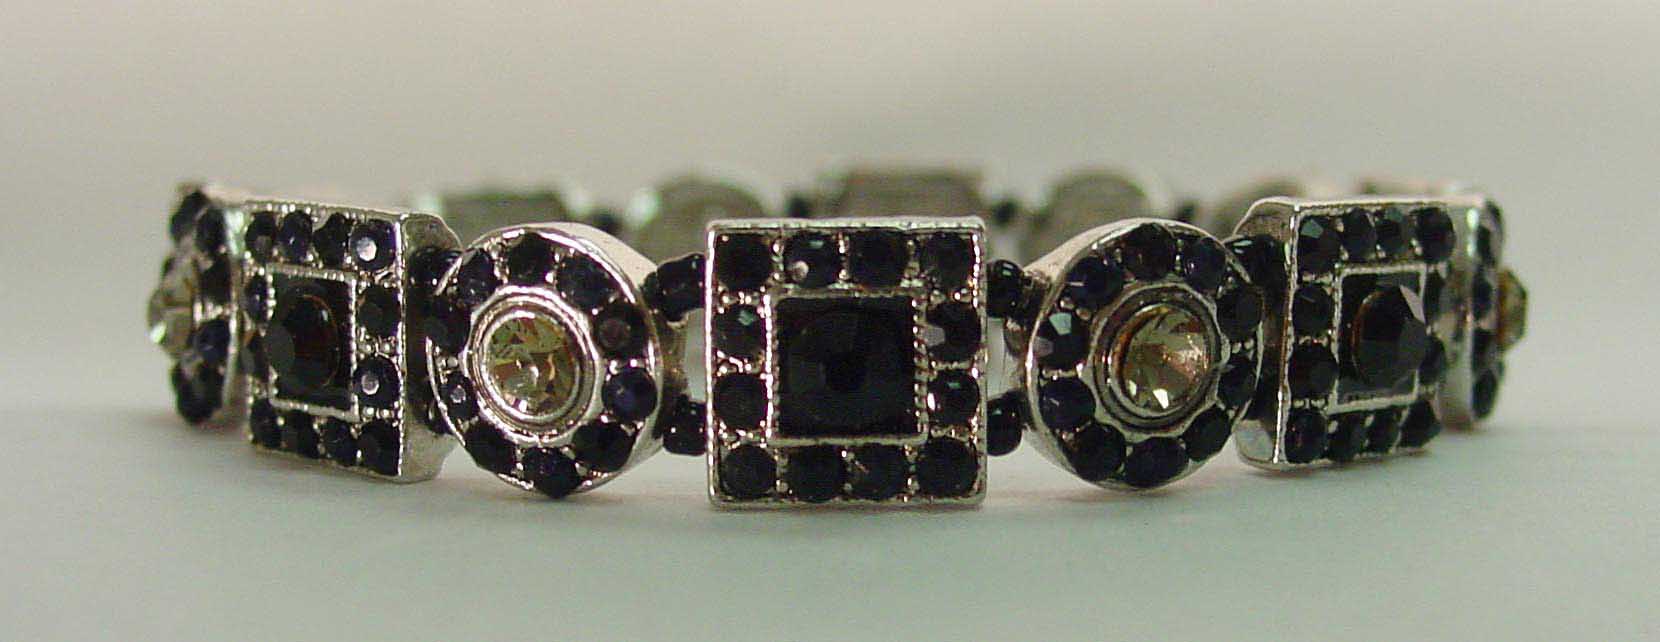 Black crystal rhodium plated bracelet